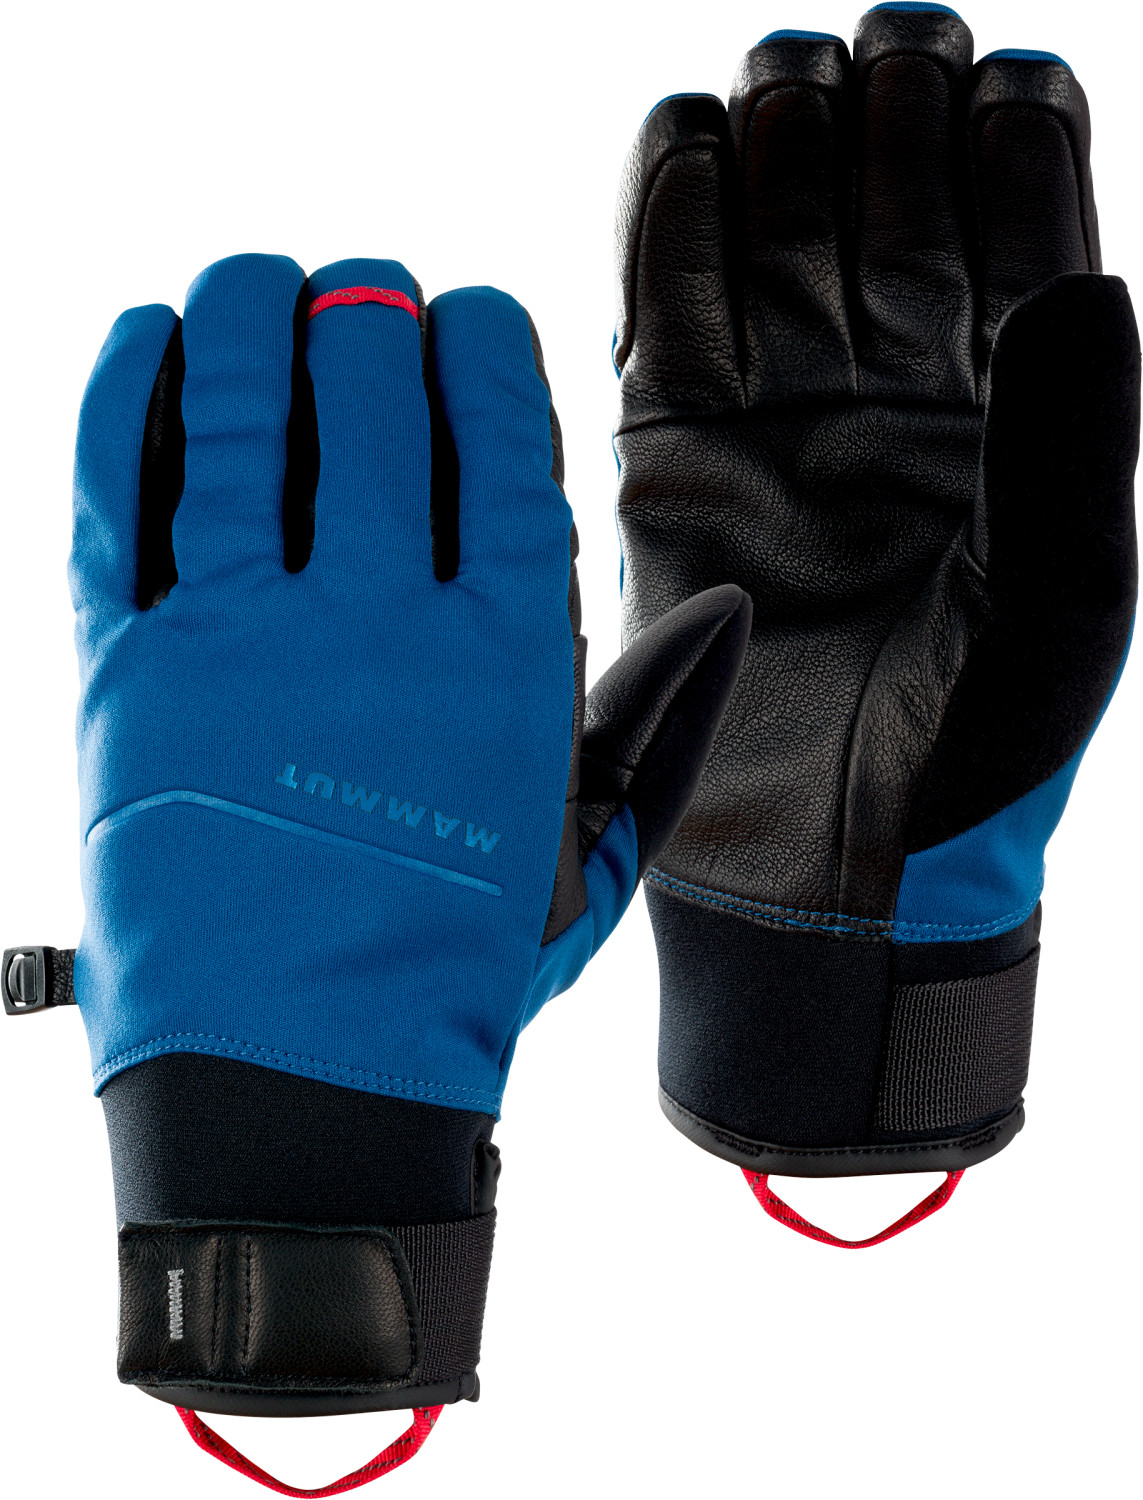 Mammut Astro Guide Gloves ab 59,99 € | Preisvergleich bei idealo.de